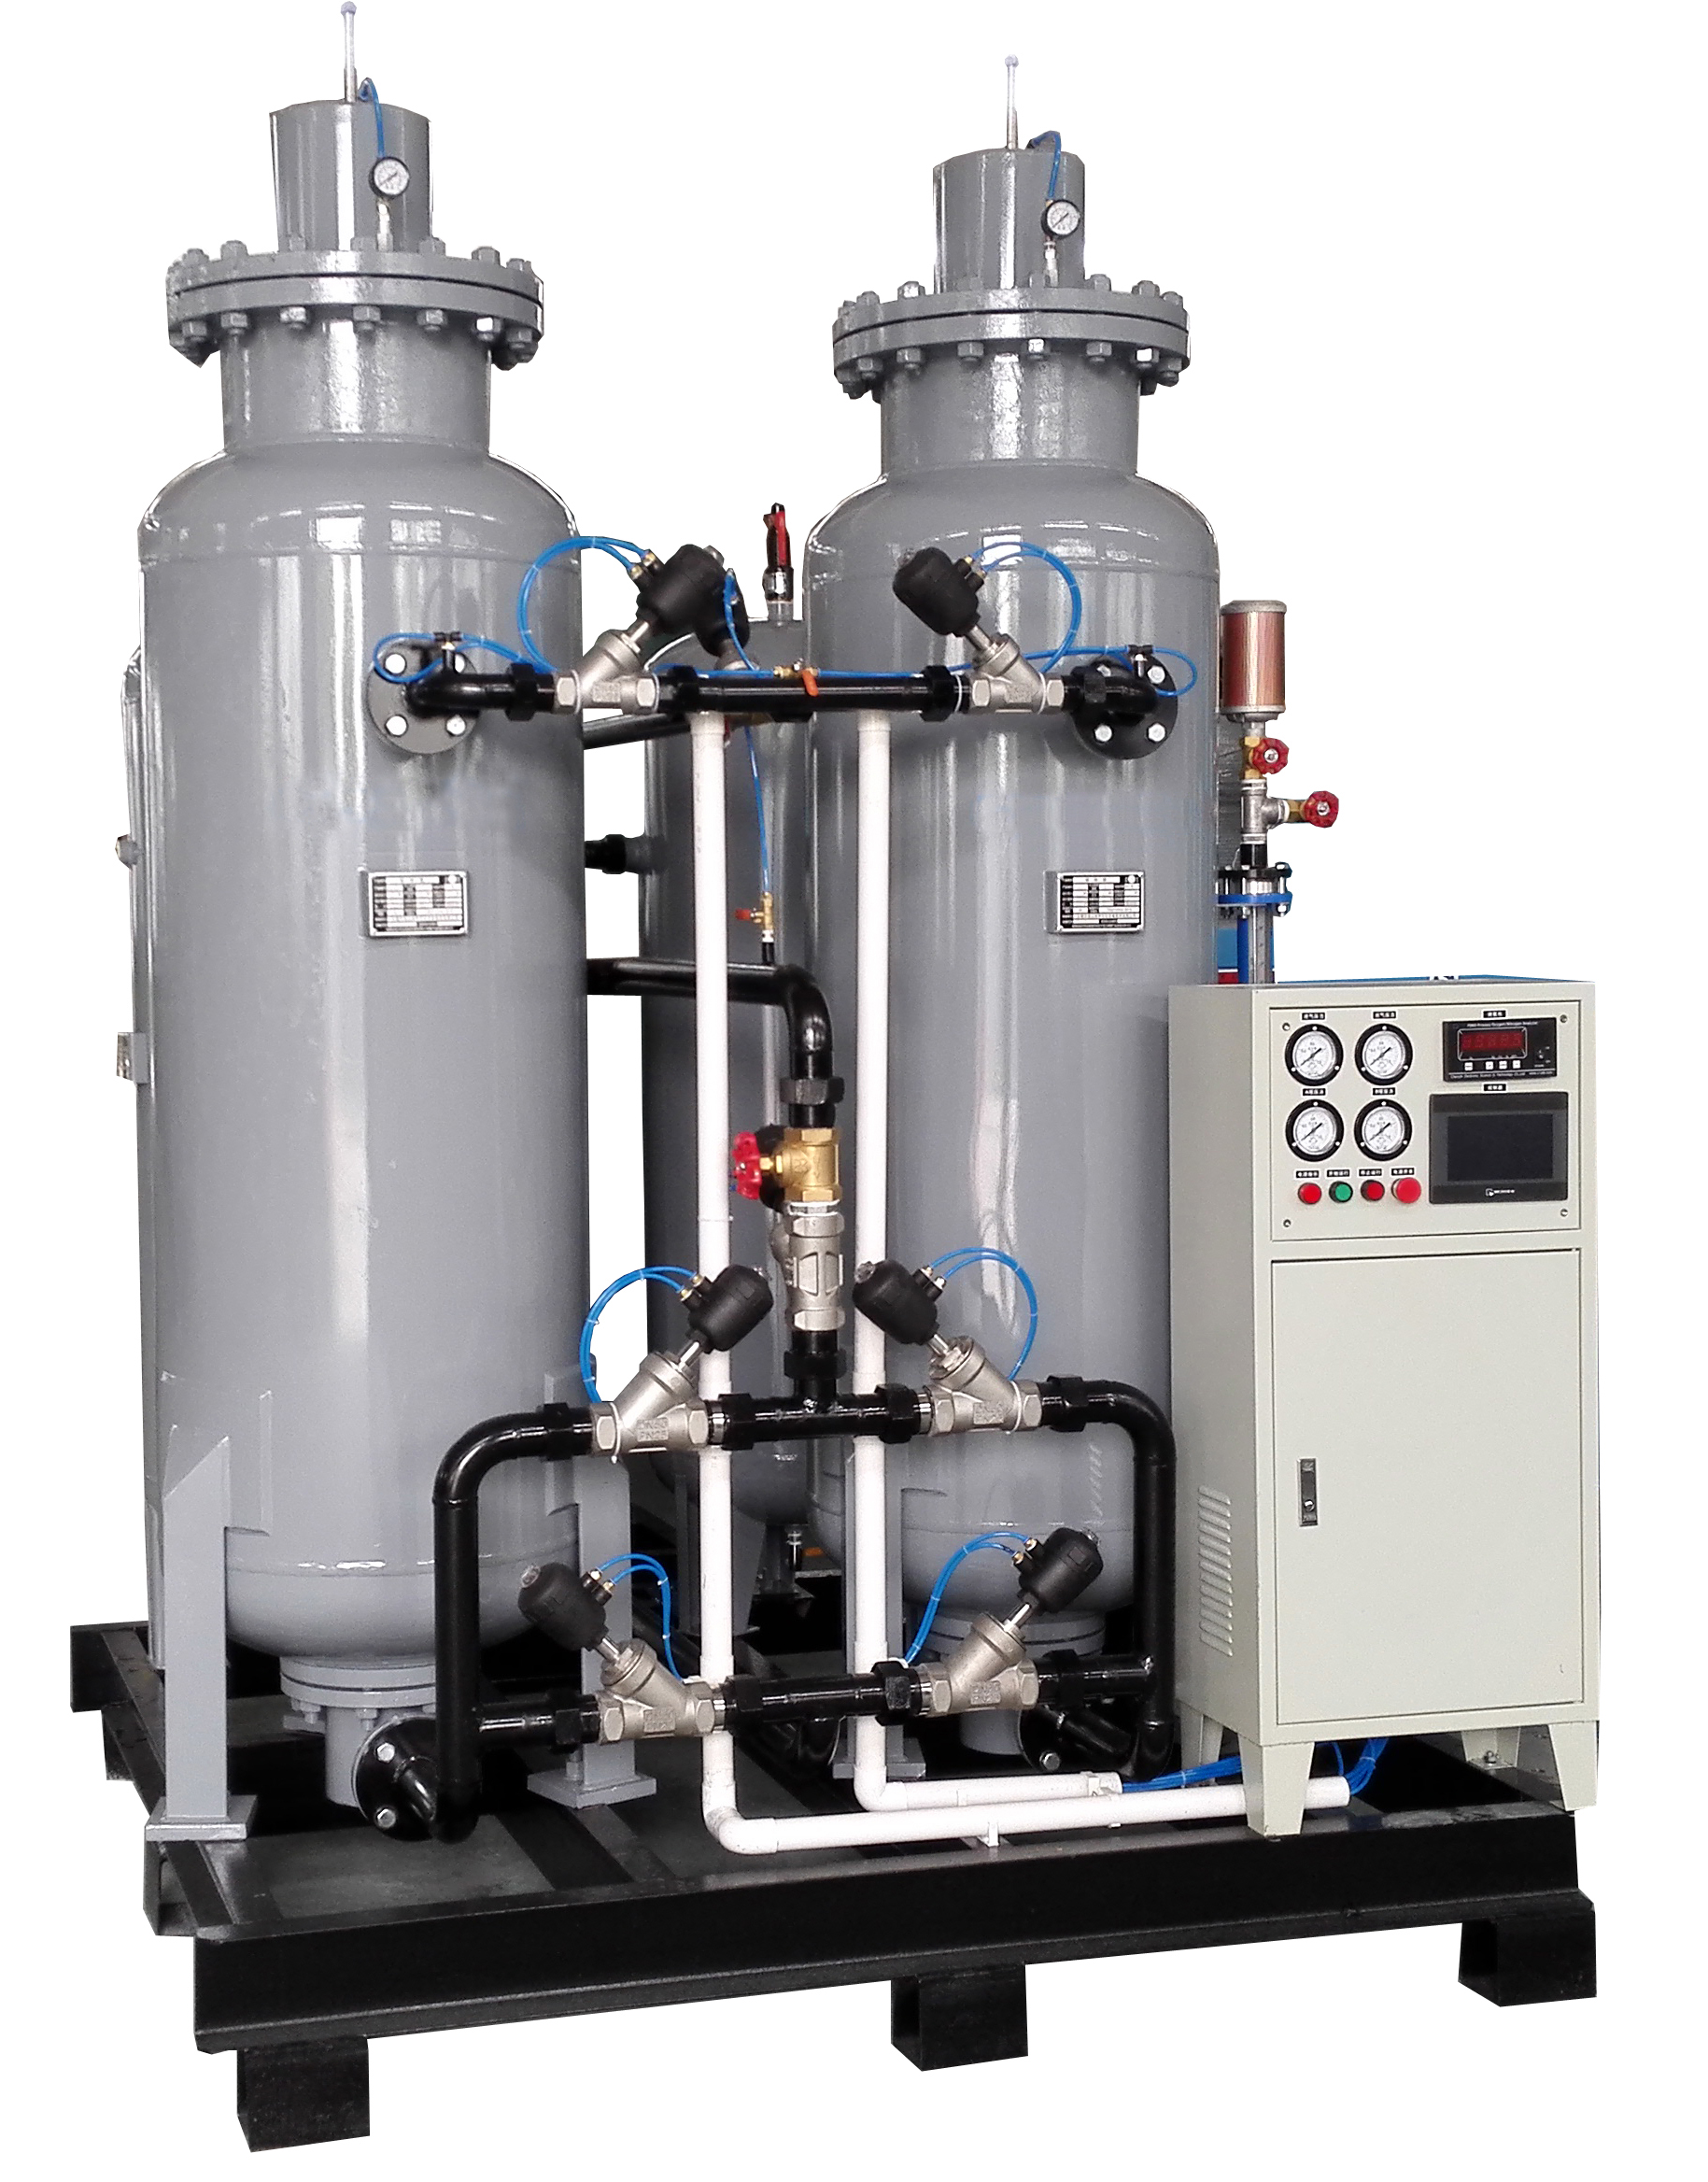 Introduction of High purity PSA Nitrogen Generator